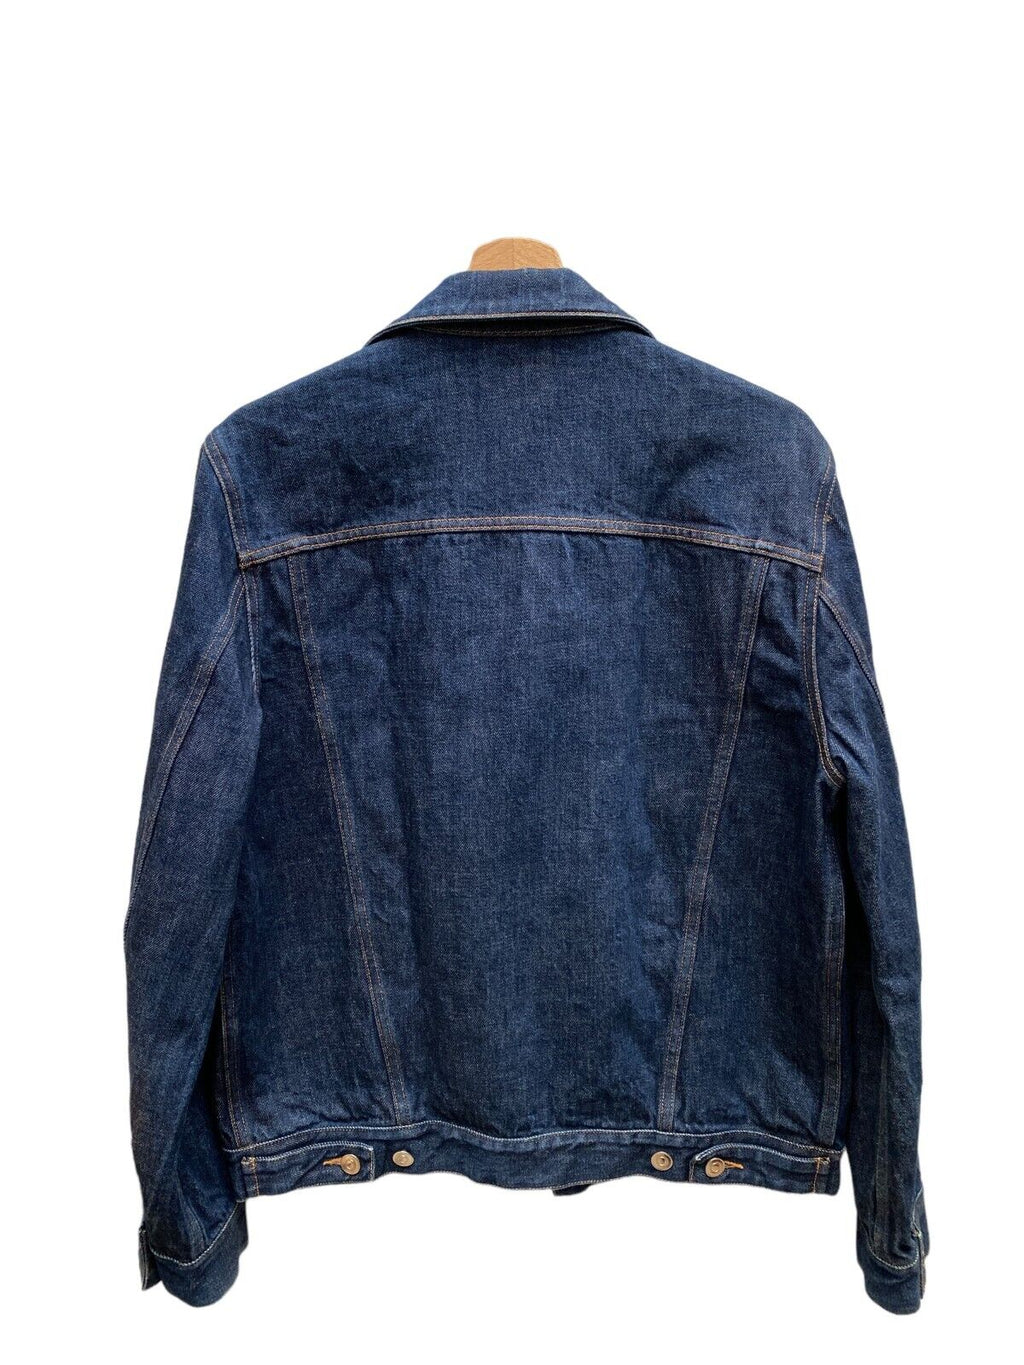 Blue Raw Denim Jacket  Size 2 / M APC Made in France